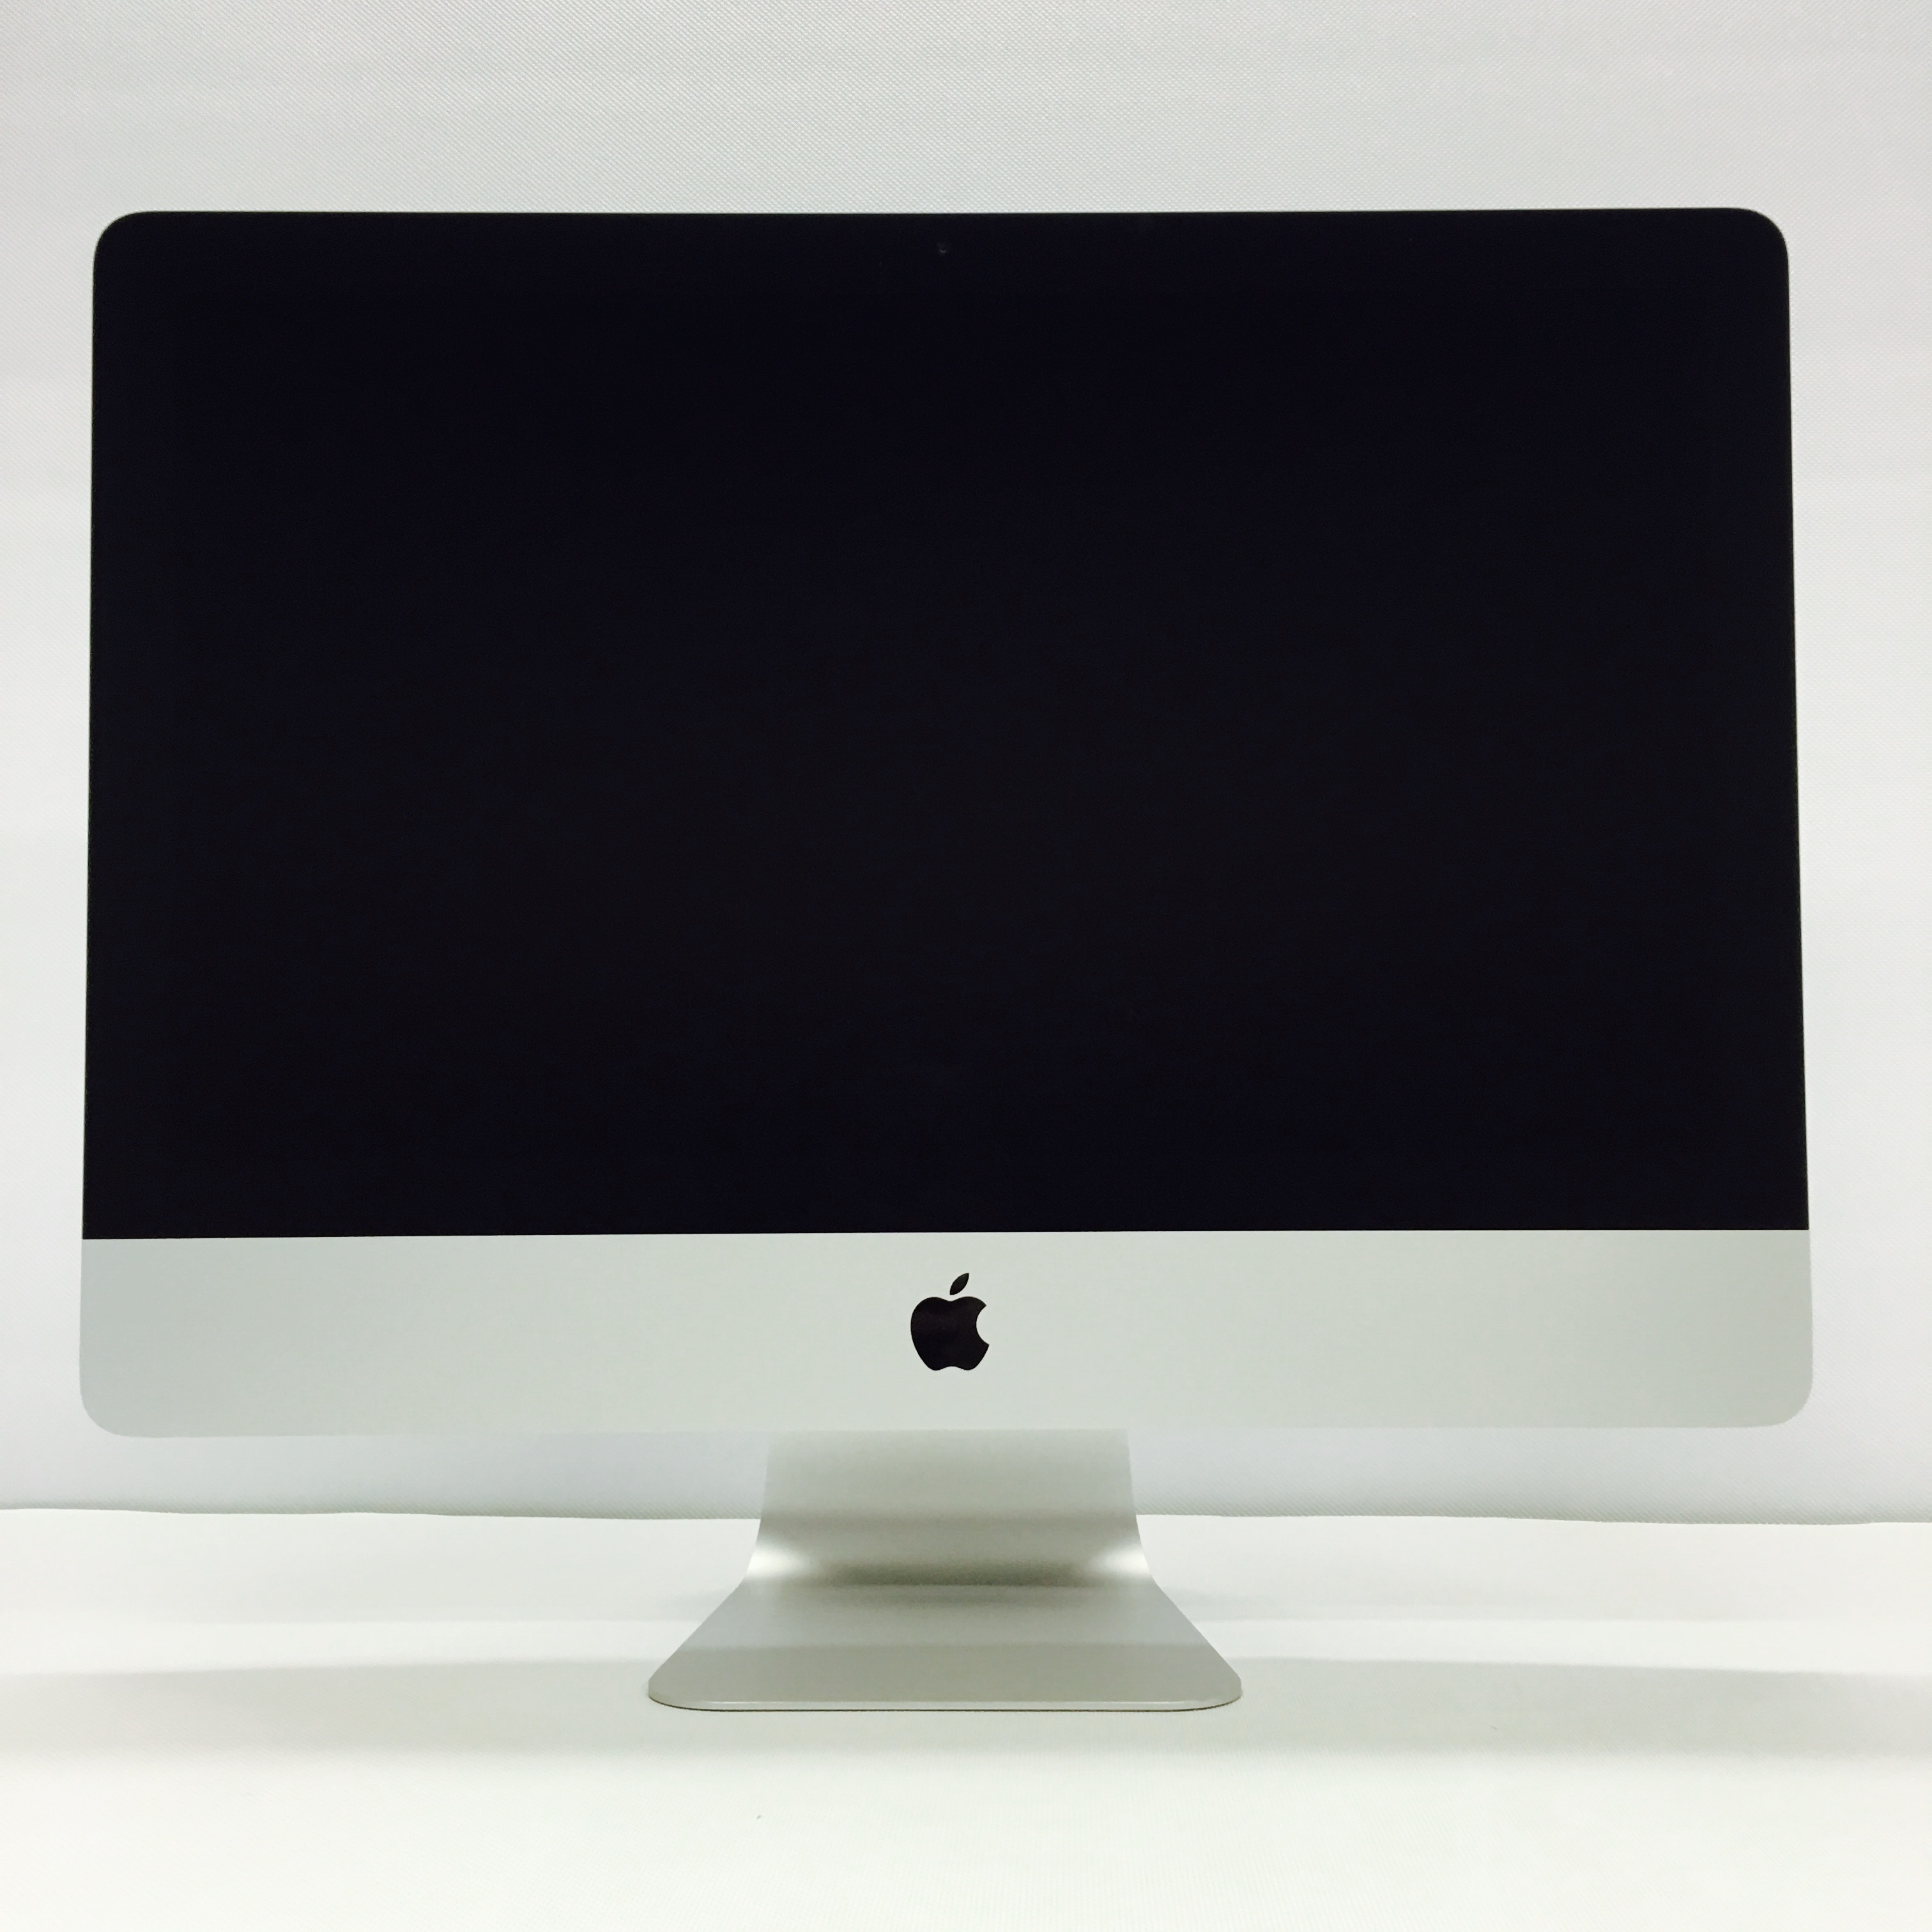 iMac 21.5" Retina 4K Late 2015 (Intel Quad-Core i5 3.1 GHz 8 GB RAM 256 GB SSD), Intel Quad-Core i5 3.1 GHz, 8 GB RAM, 256 GB SSD, image 1